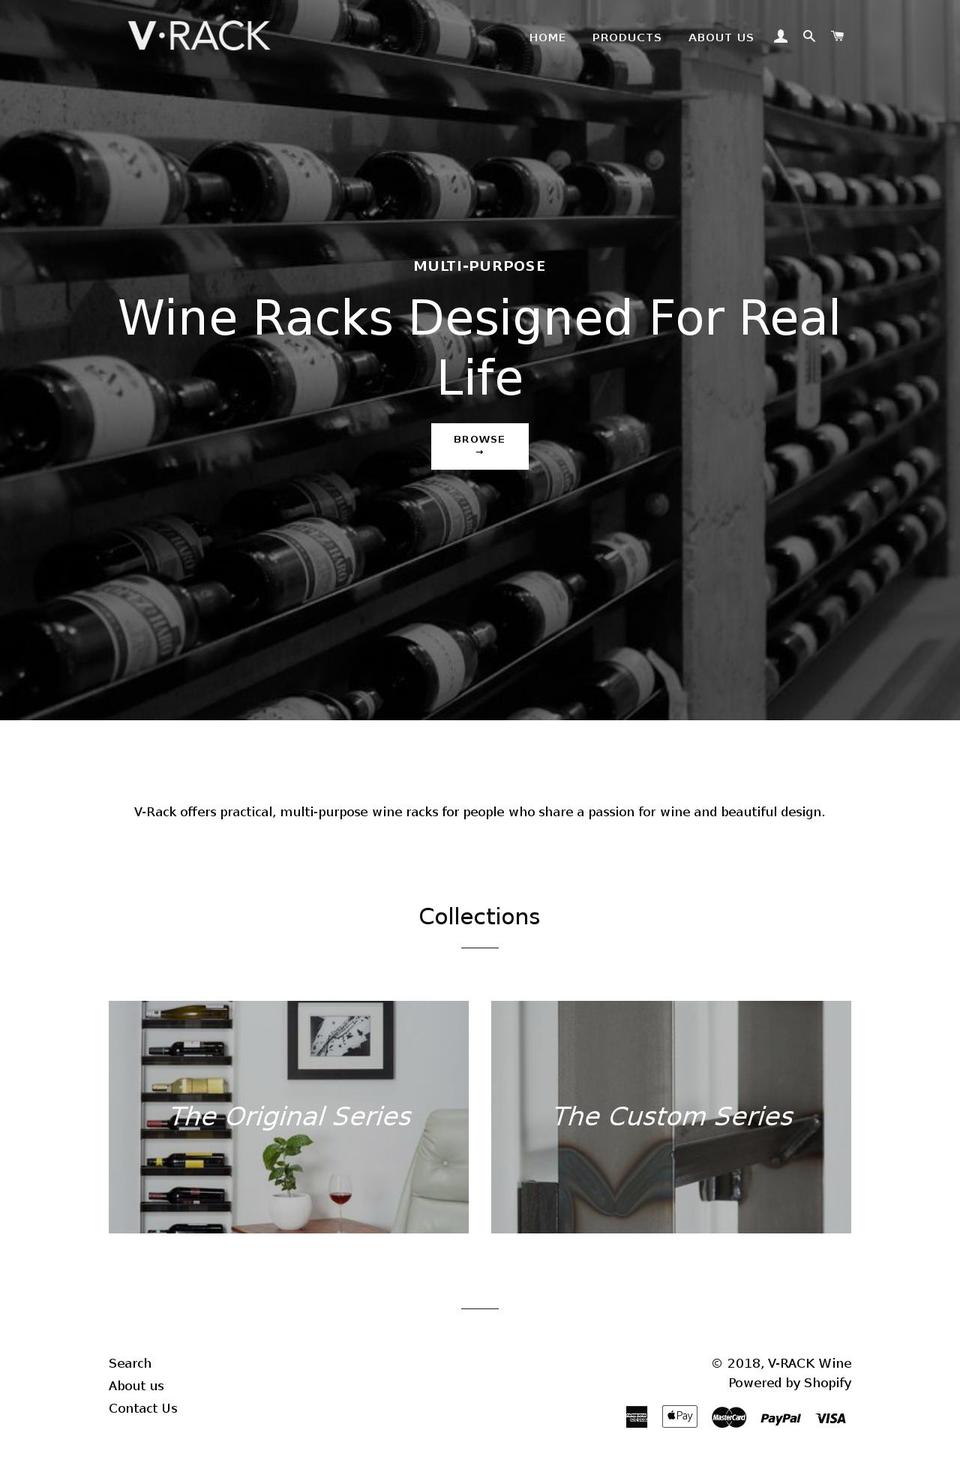 vrack.wine shopify website screenshot